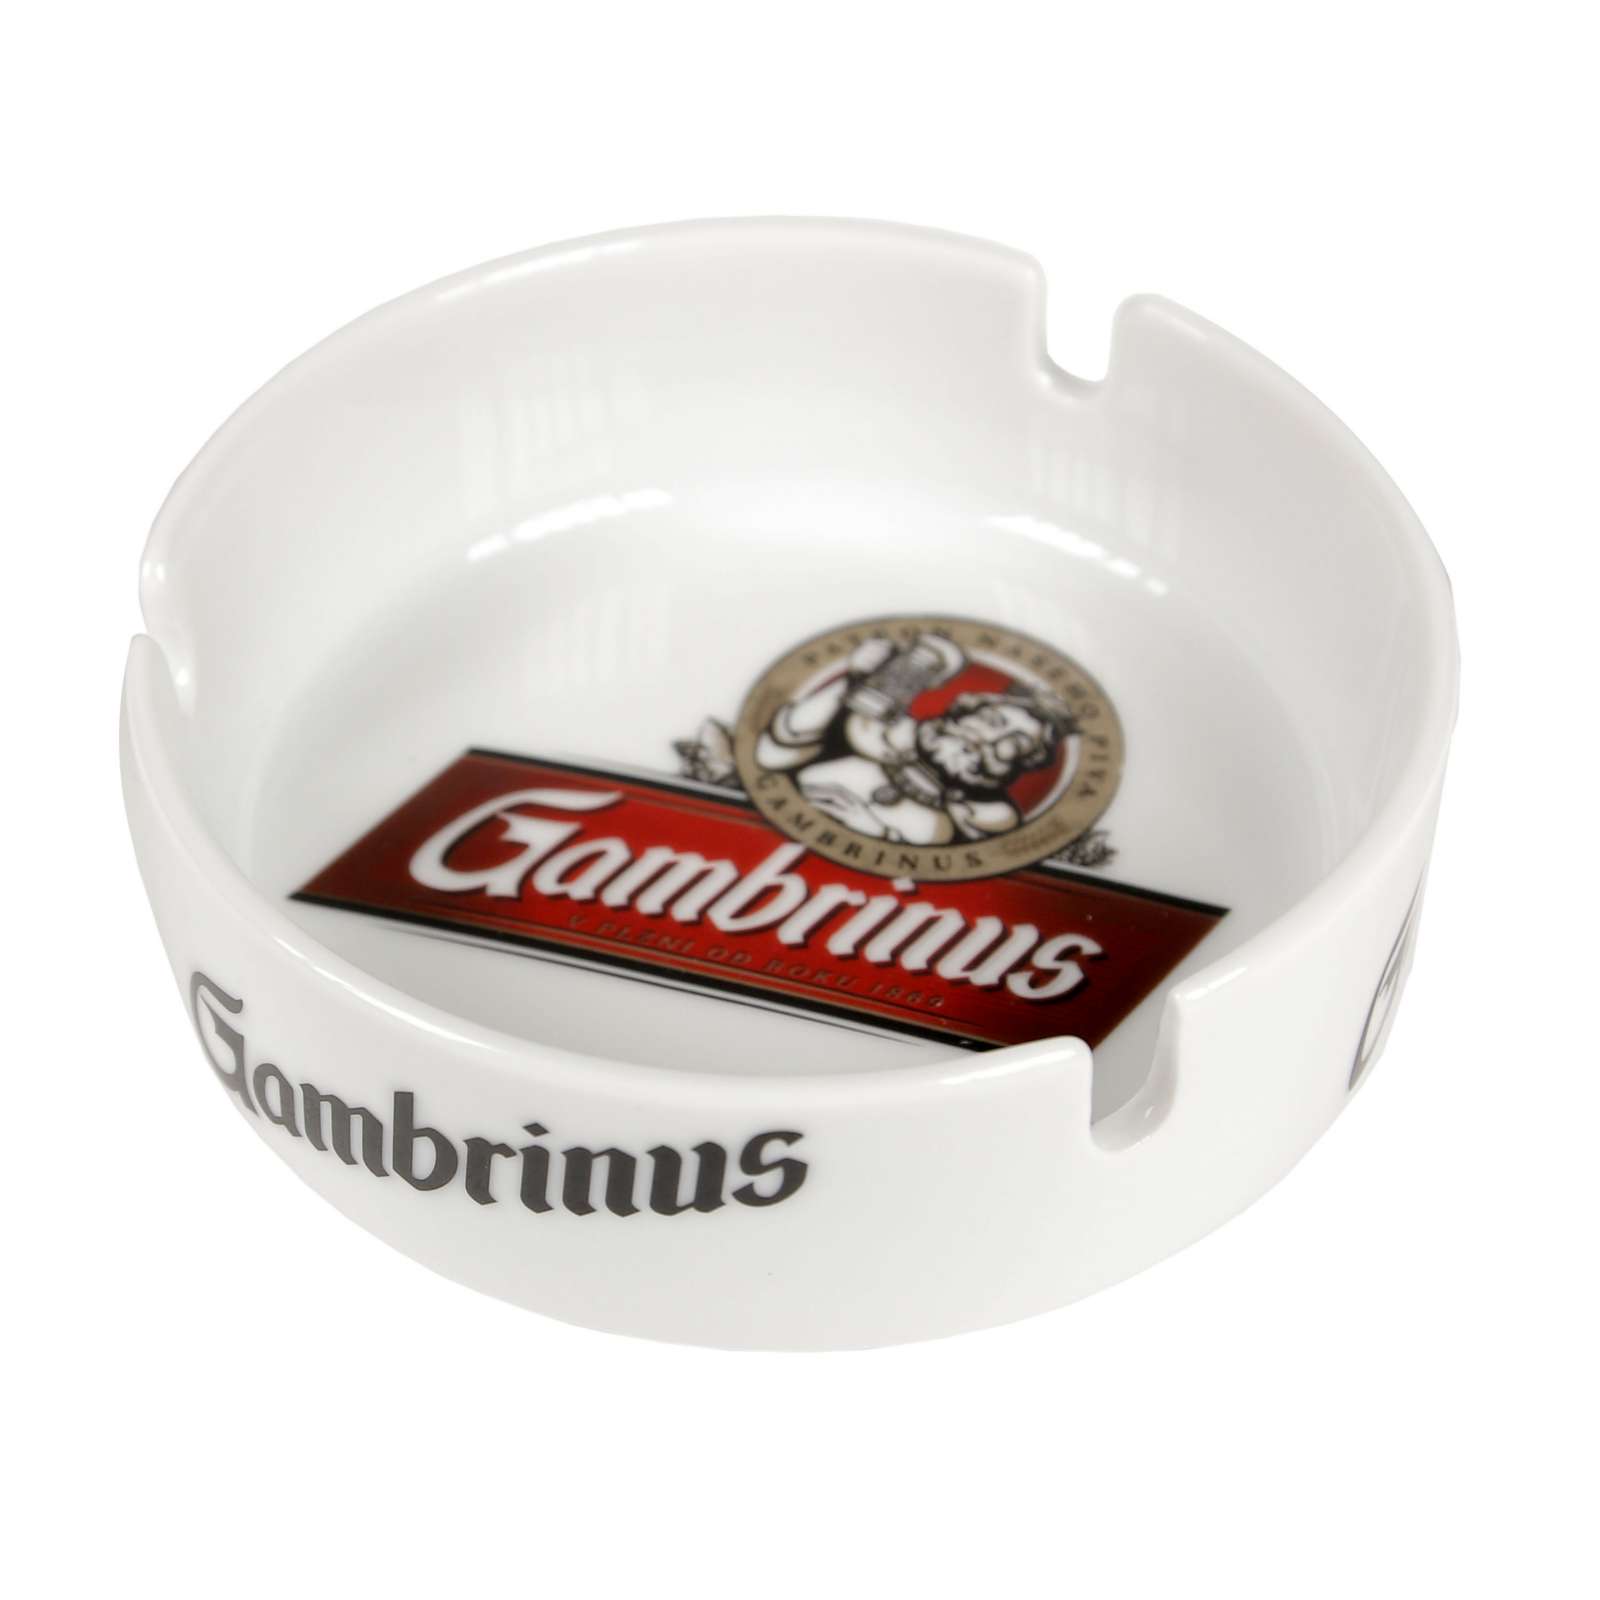 Porcelain Gambrinus ashtray